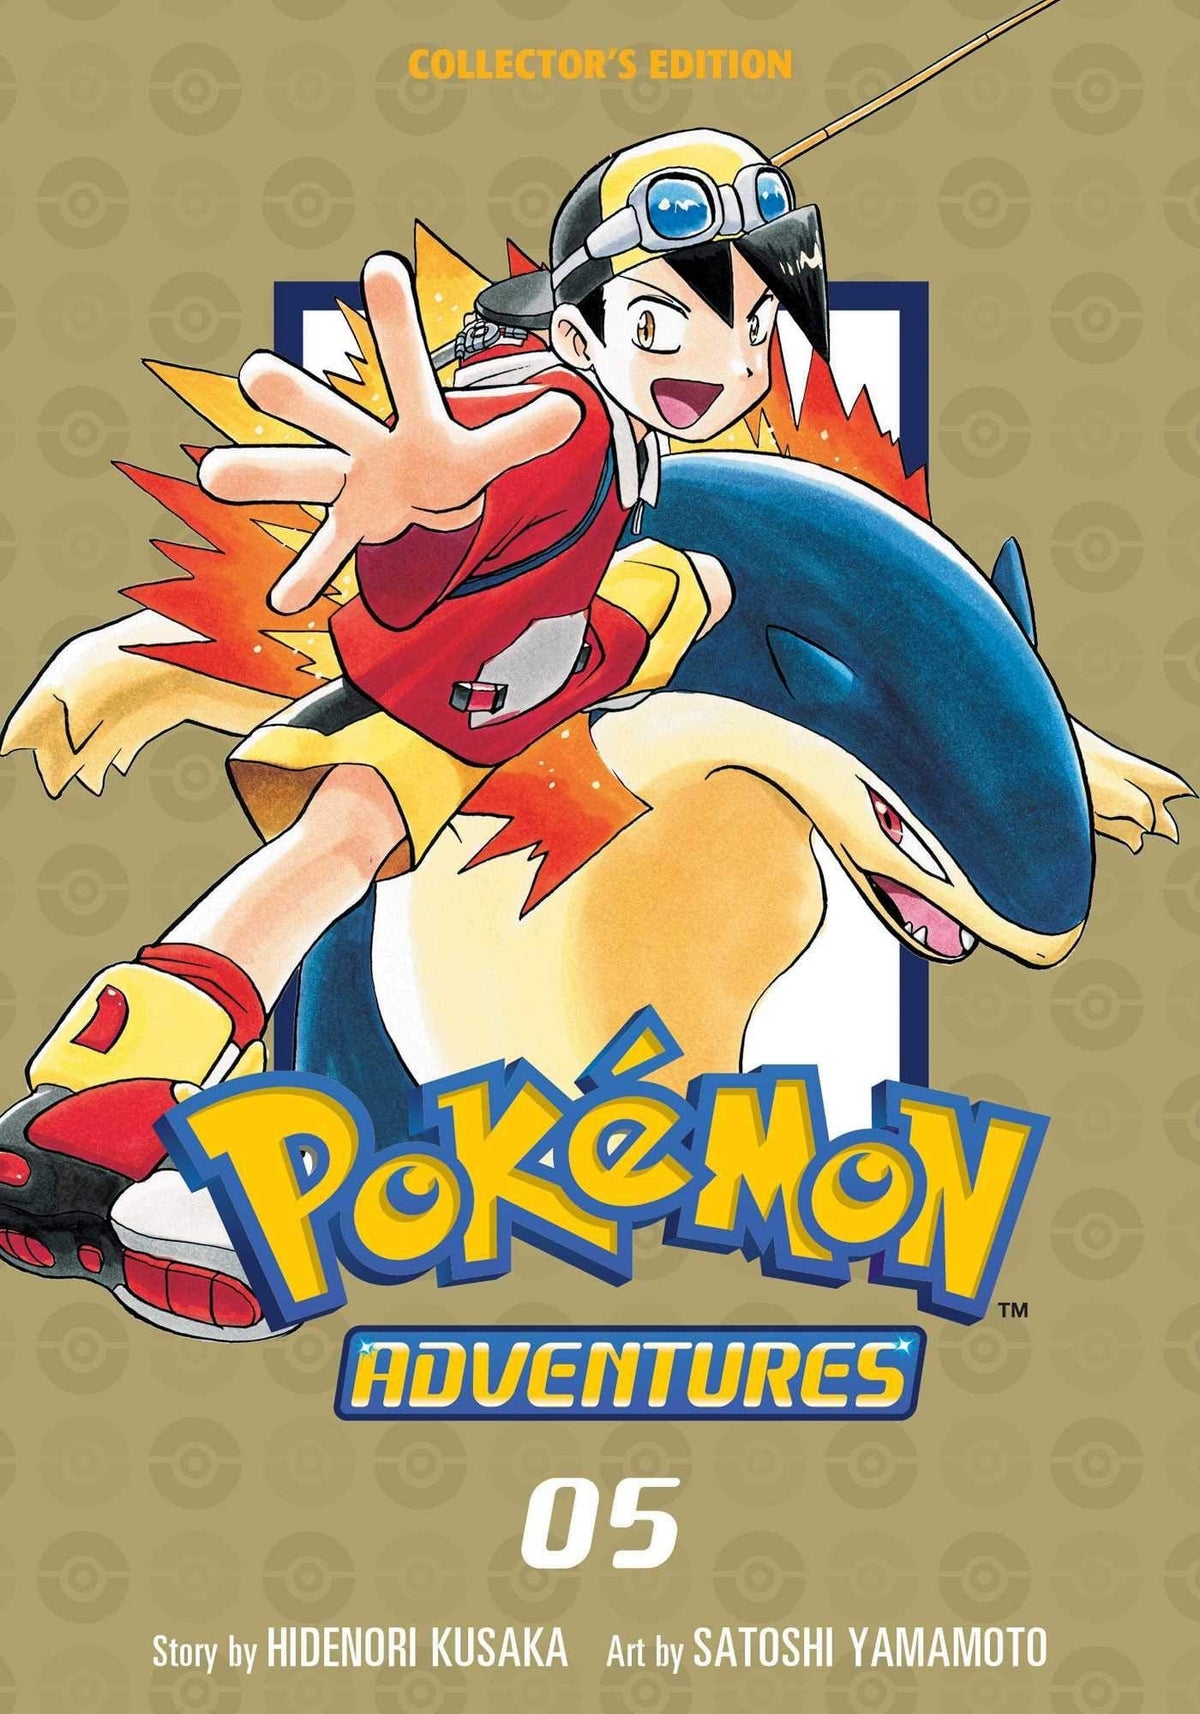 MANGA Viz Kids Pokemon Adventures PLATINUM 1-11 TP